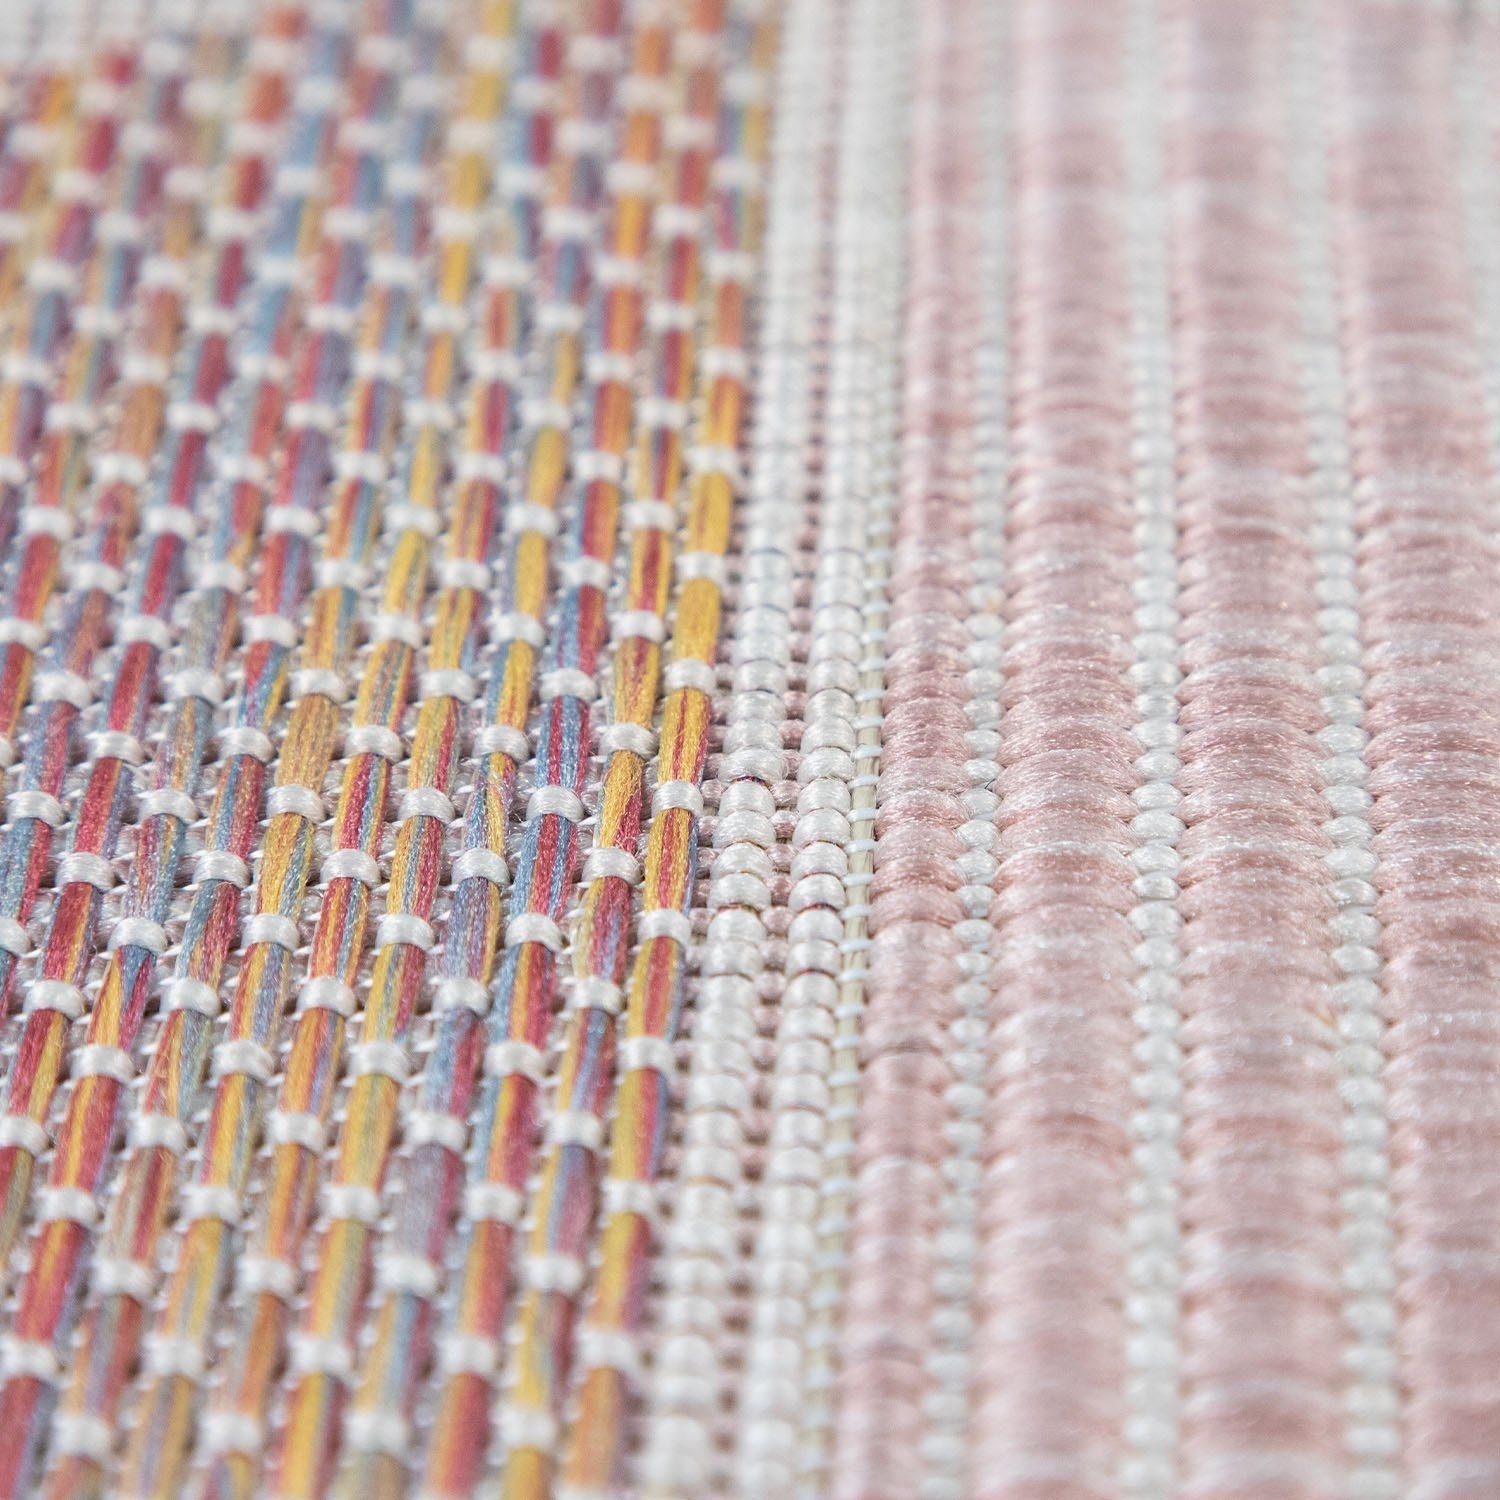 Home, Pastell- mm, Outdoor Paco rechteckig, Höhe: Teppich Flachgewebe, geeignet Kuba modernes Design, 130, Farben, 4